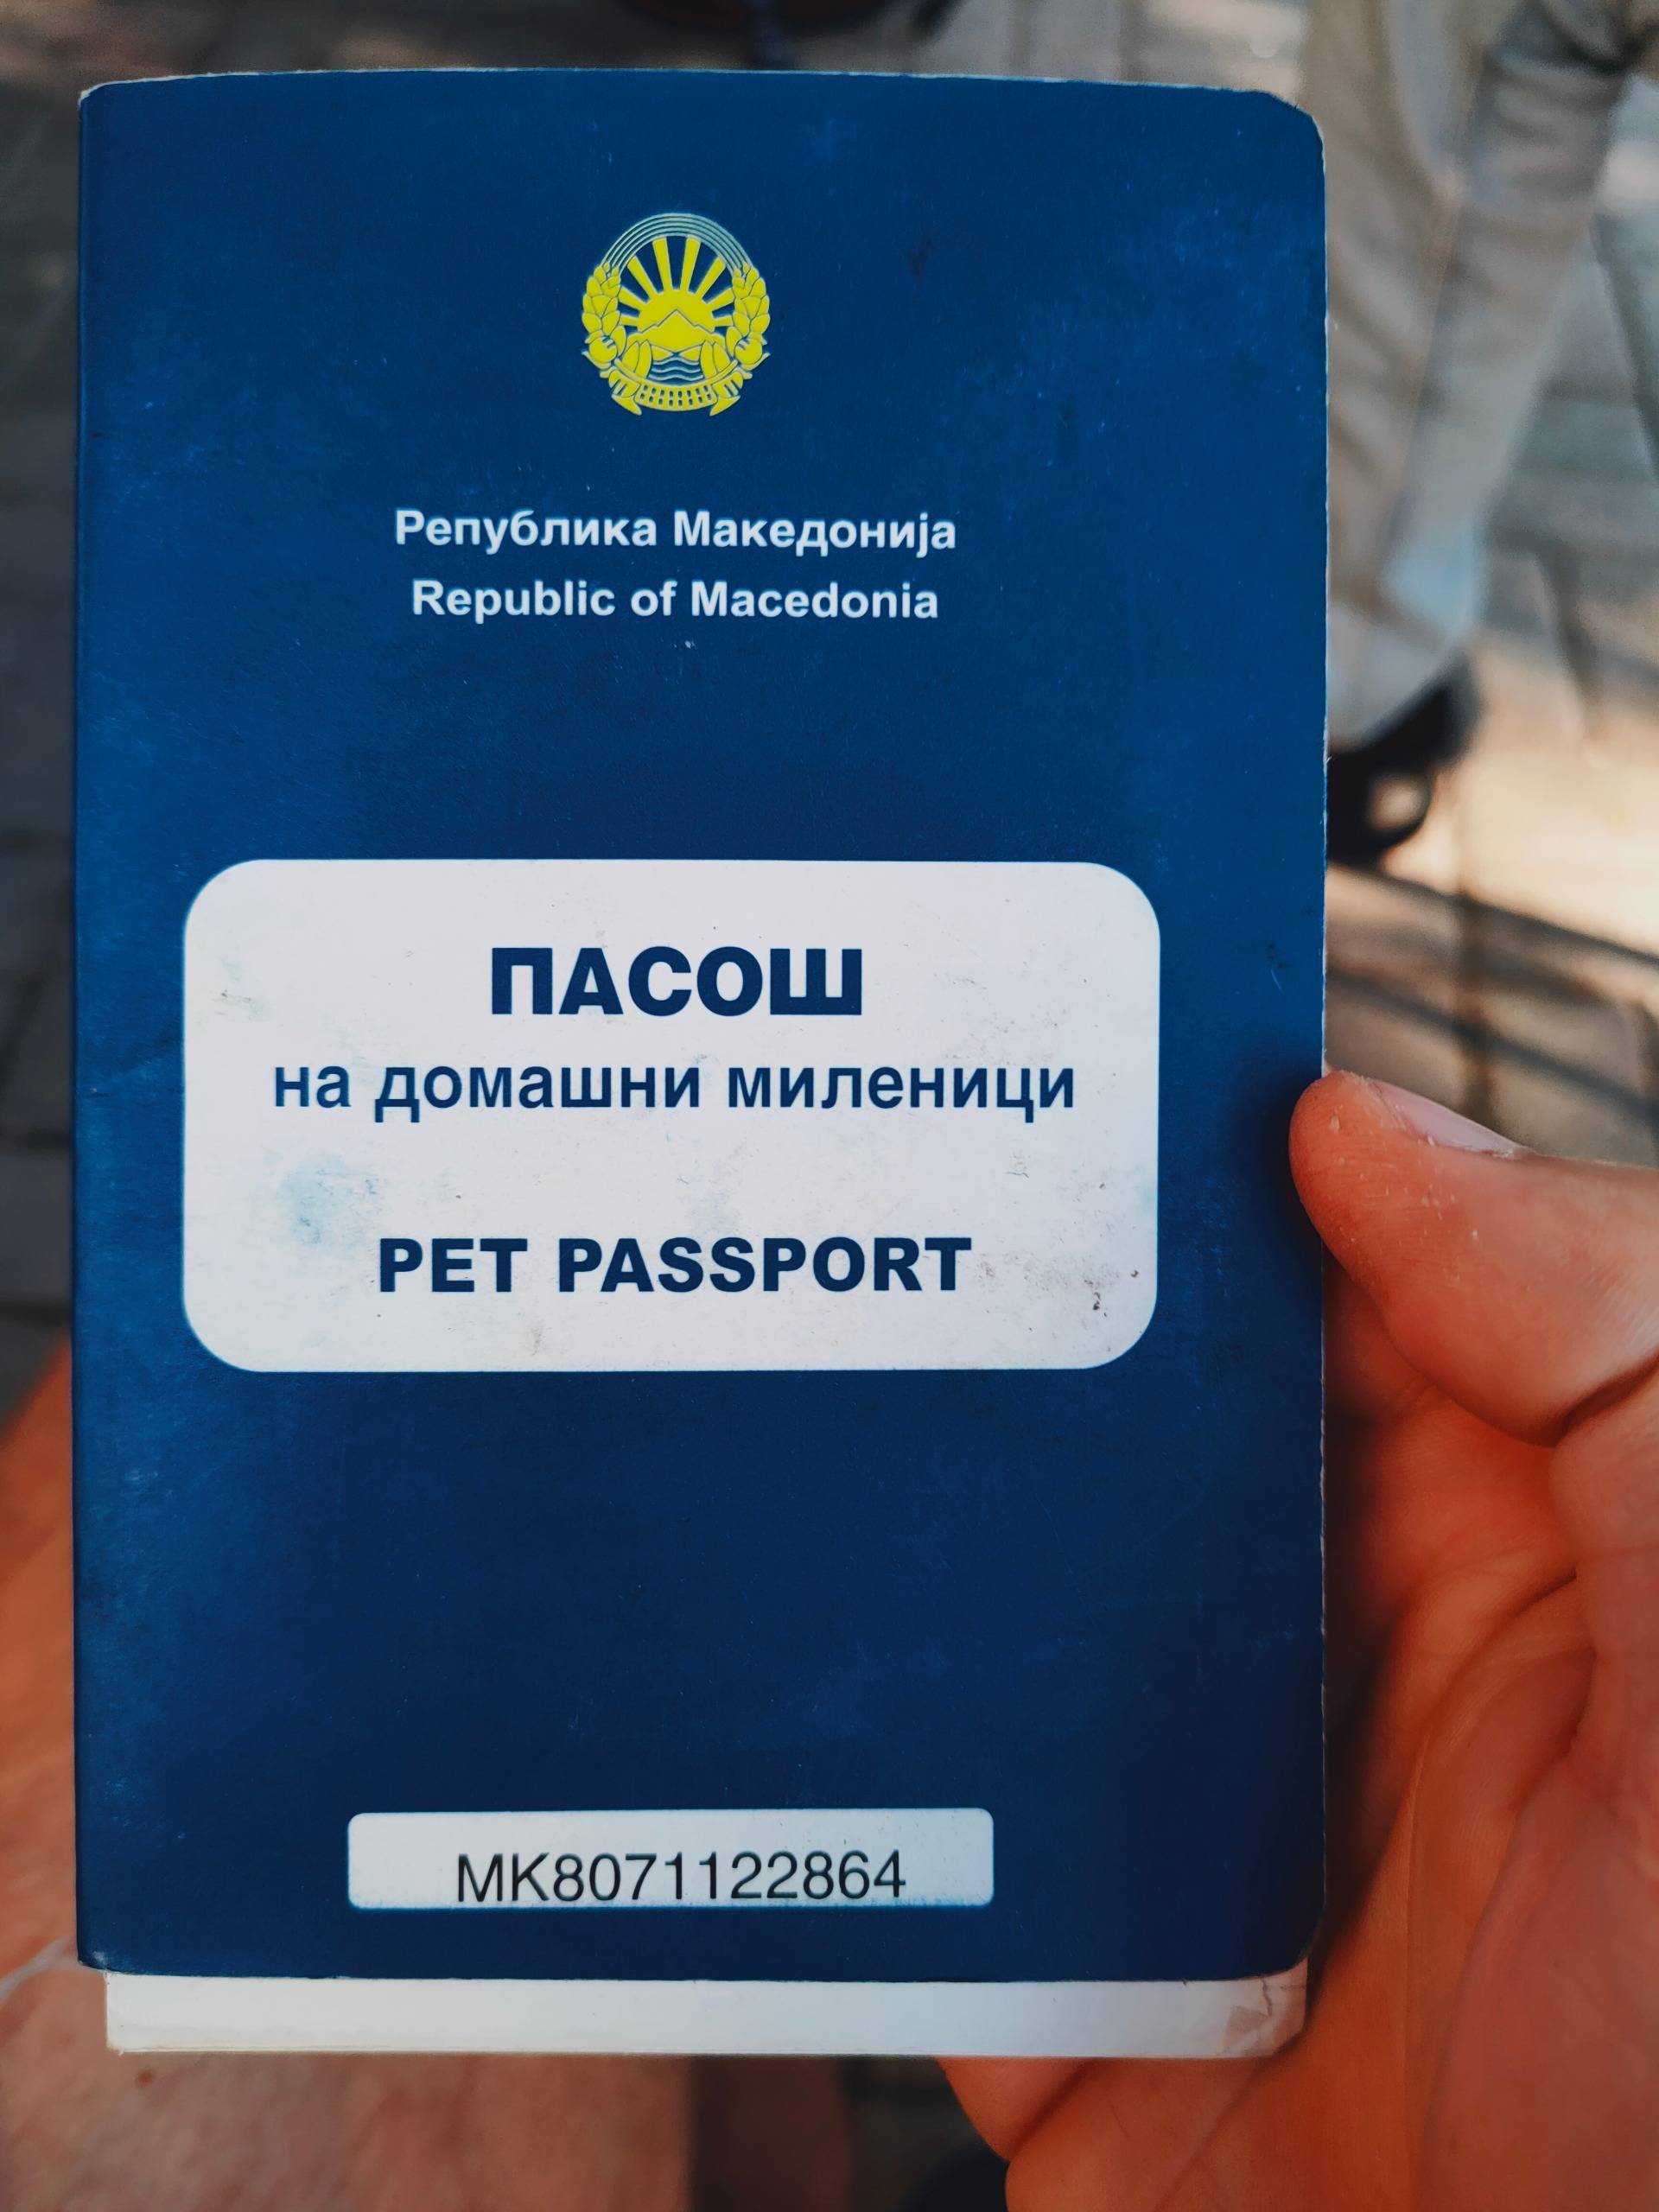 Pet passports, Turkish haircut and Czech-alike beer in Skopje, Macedonia.